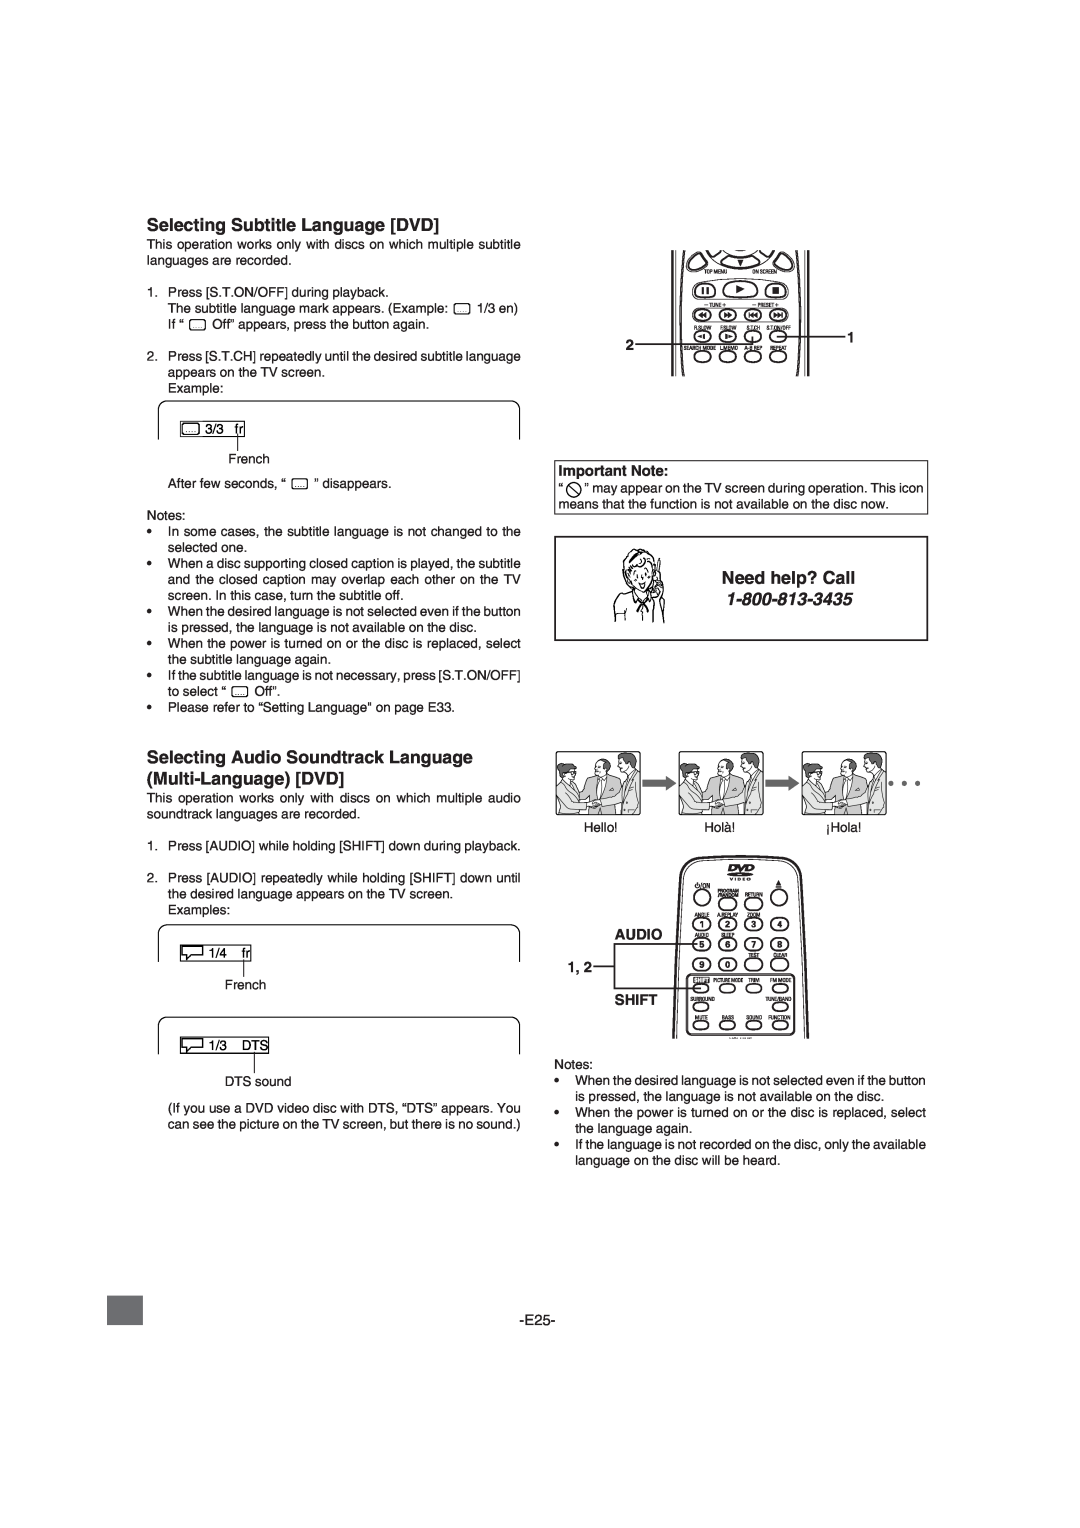 Sanyo DWM-2600 instruction manual Selecting Subtitle Language DVD, Need help? Call, Important Note, AUDIO 1, SHIFT 